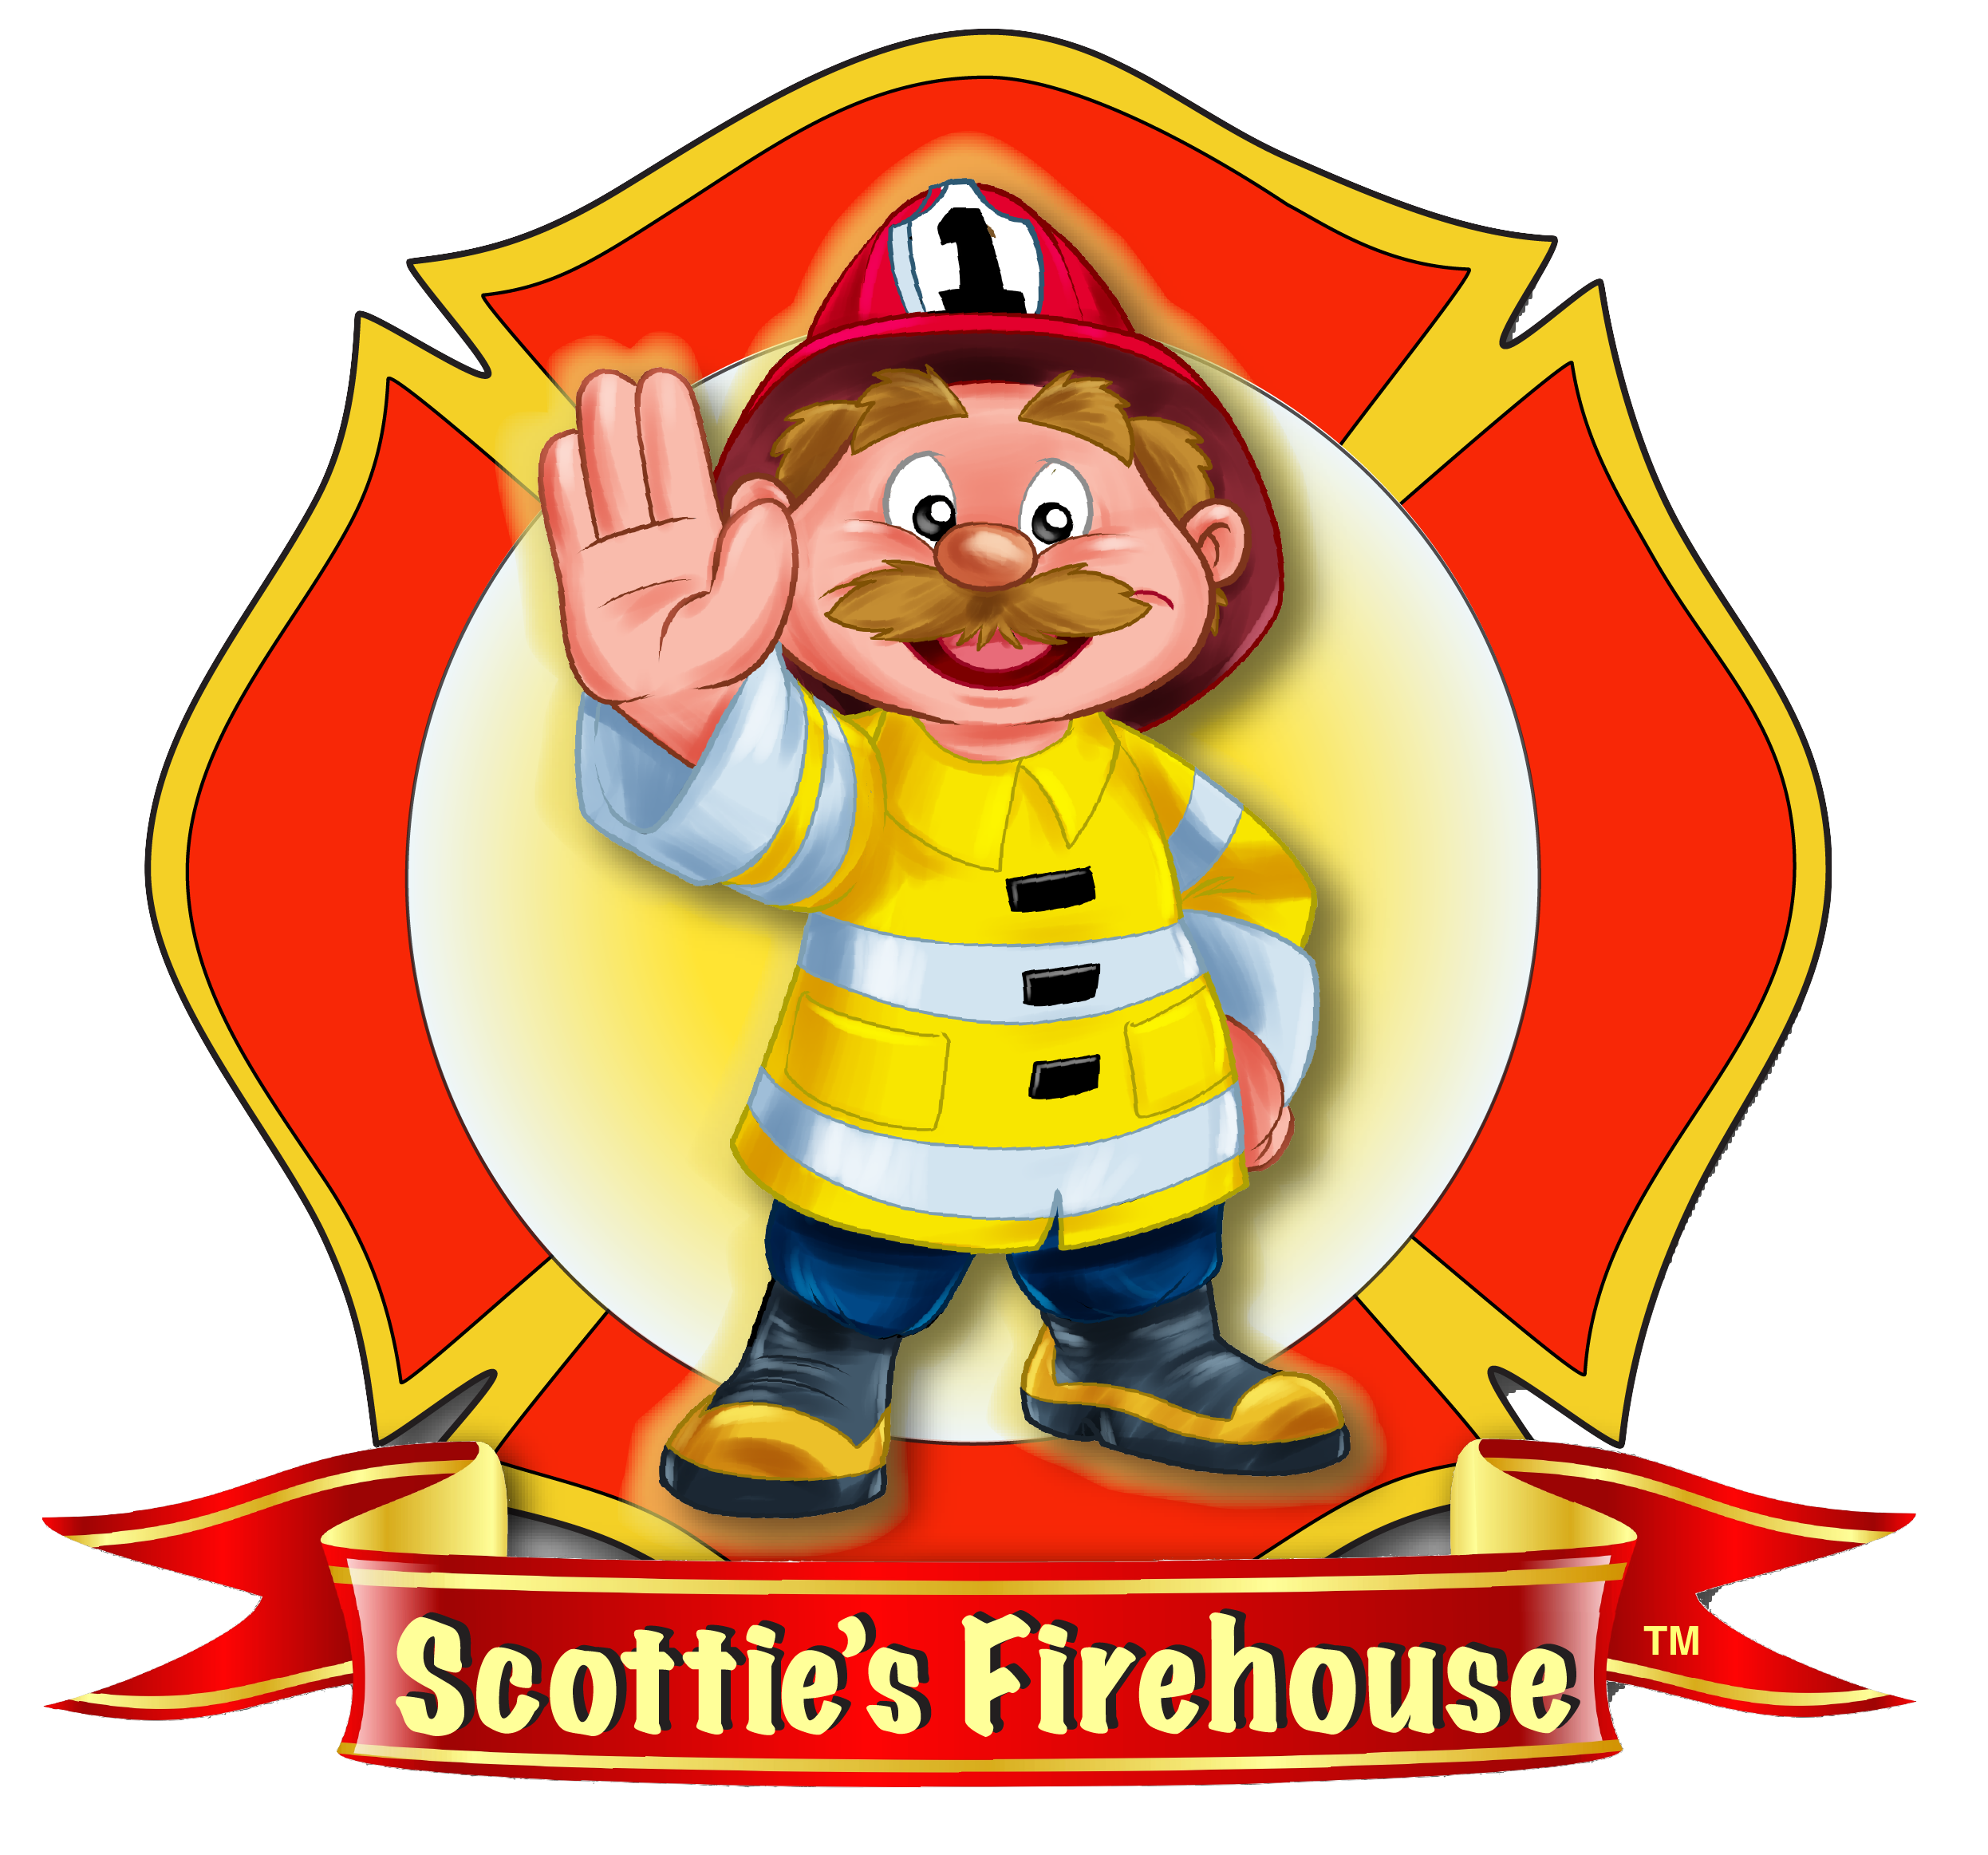 SCOTTIE'S FIREHOUSE